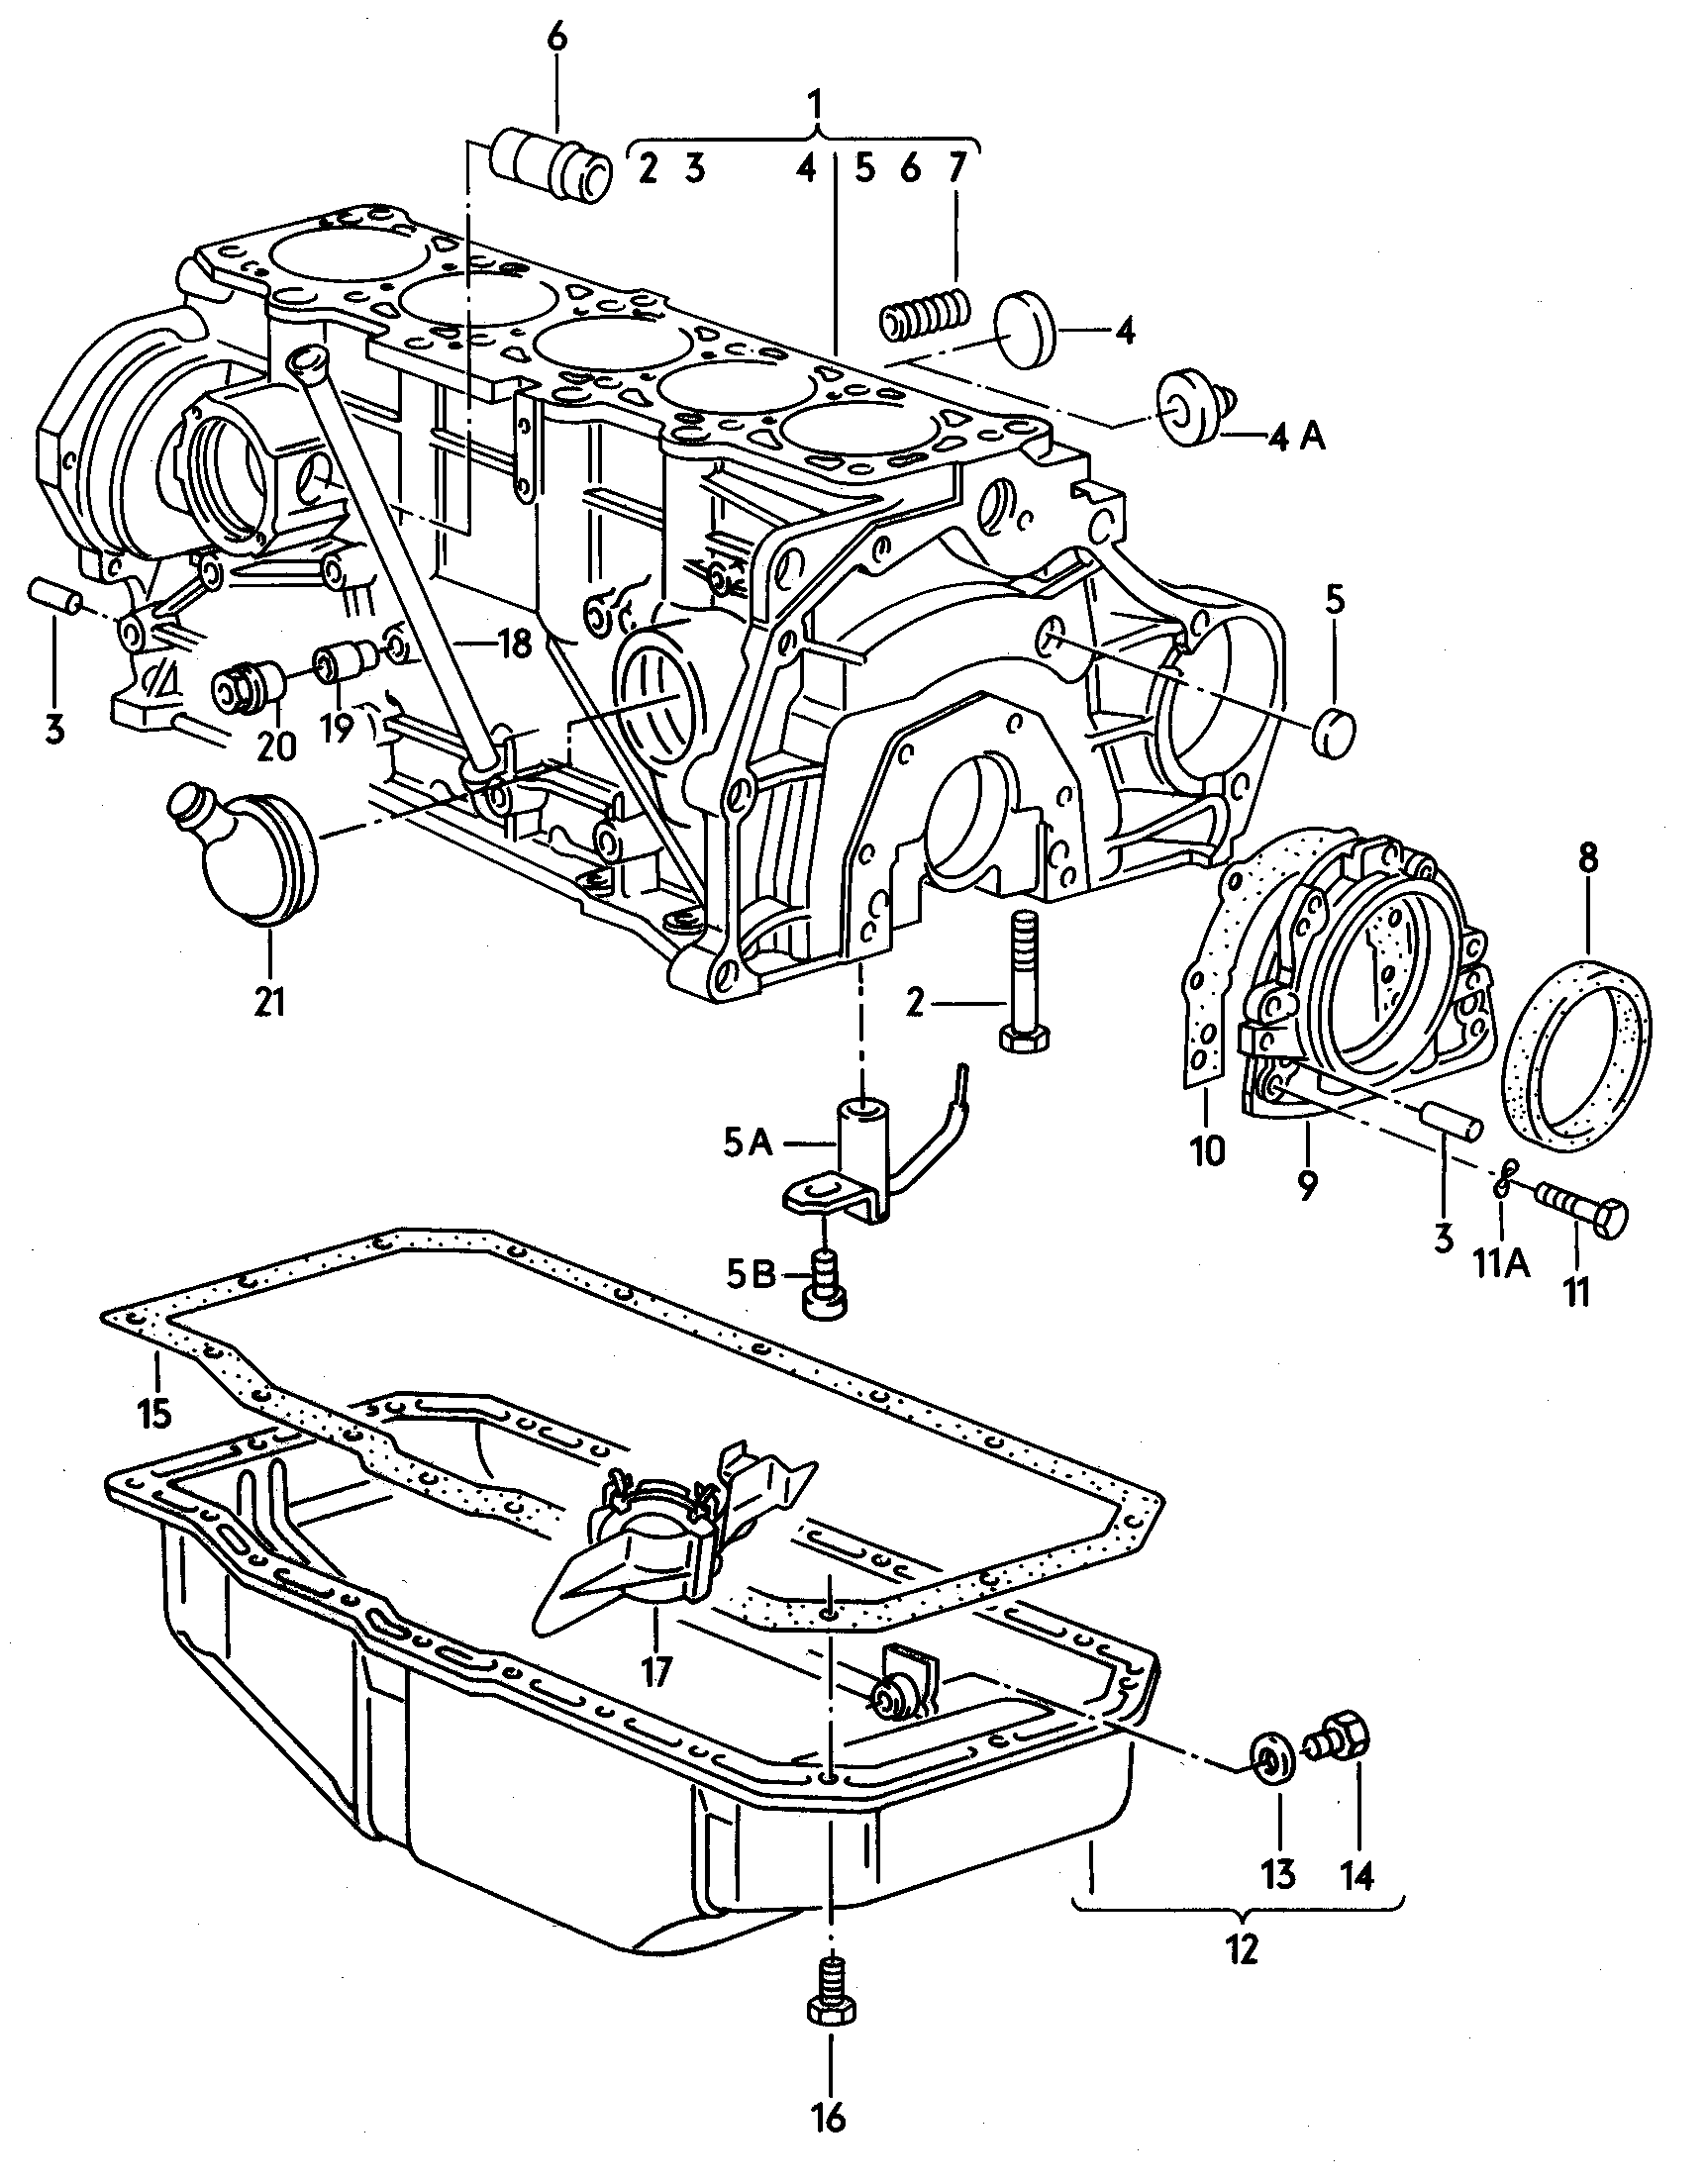 cylinder block with pistonsoil sump  - Audi quattro/Sport - aqs